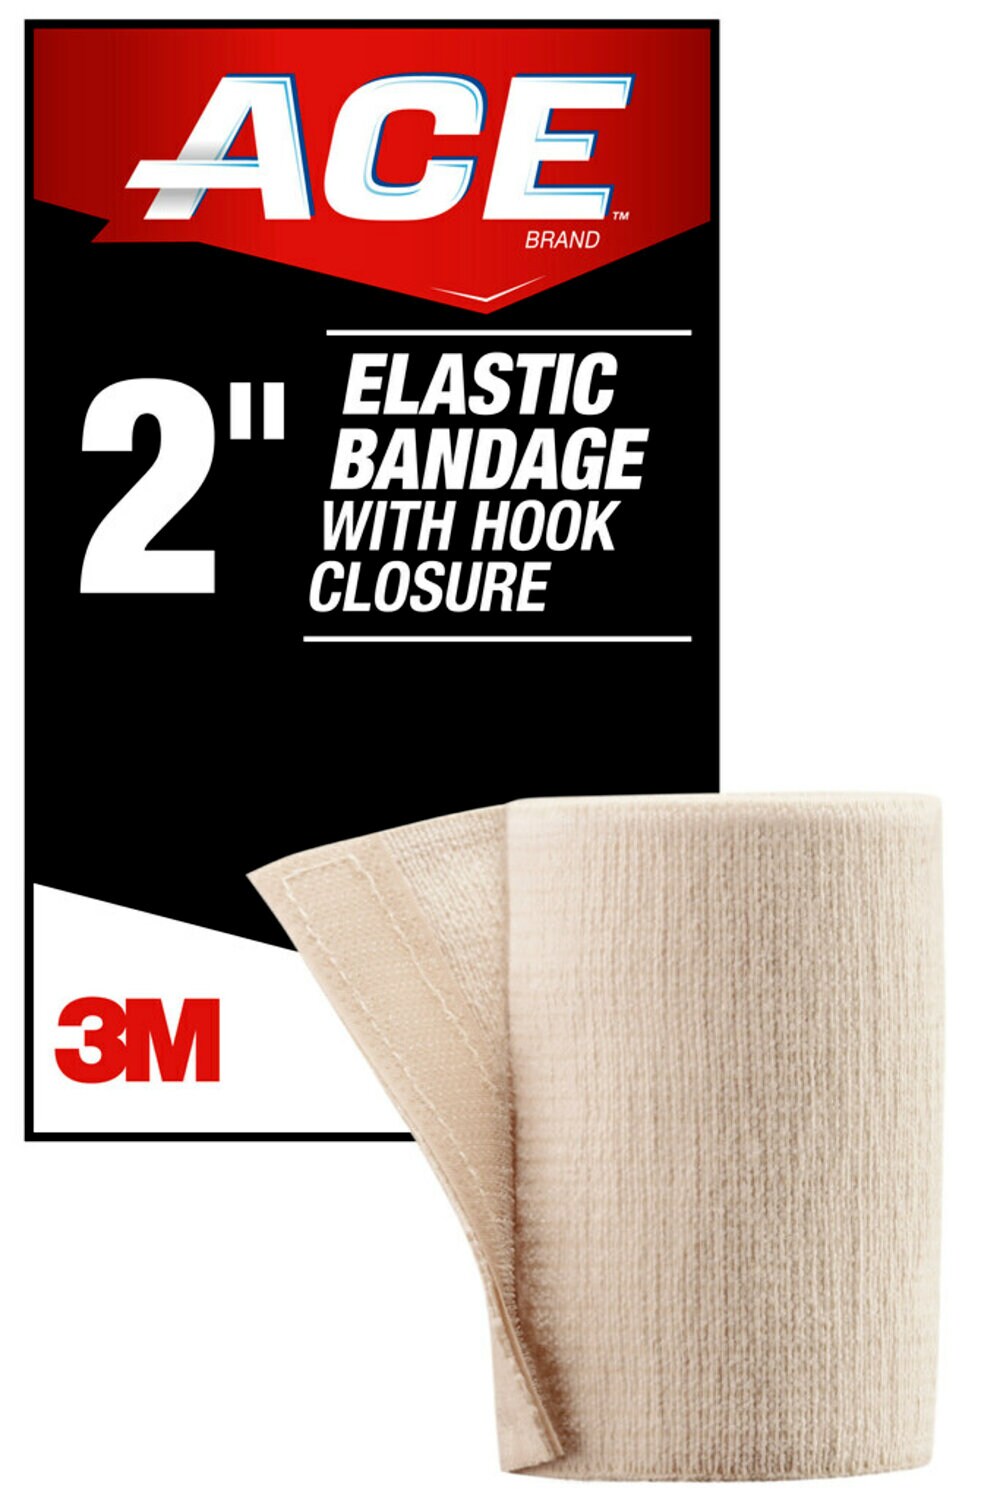 7100105726 - ACE Elastic Bandage w/ hook closure 207602, 2 in